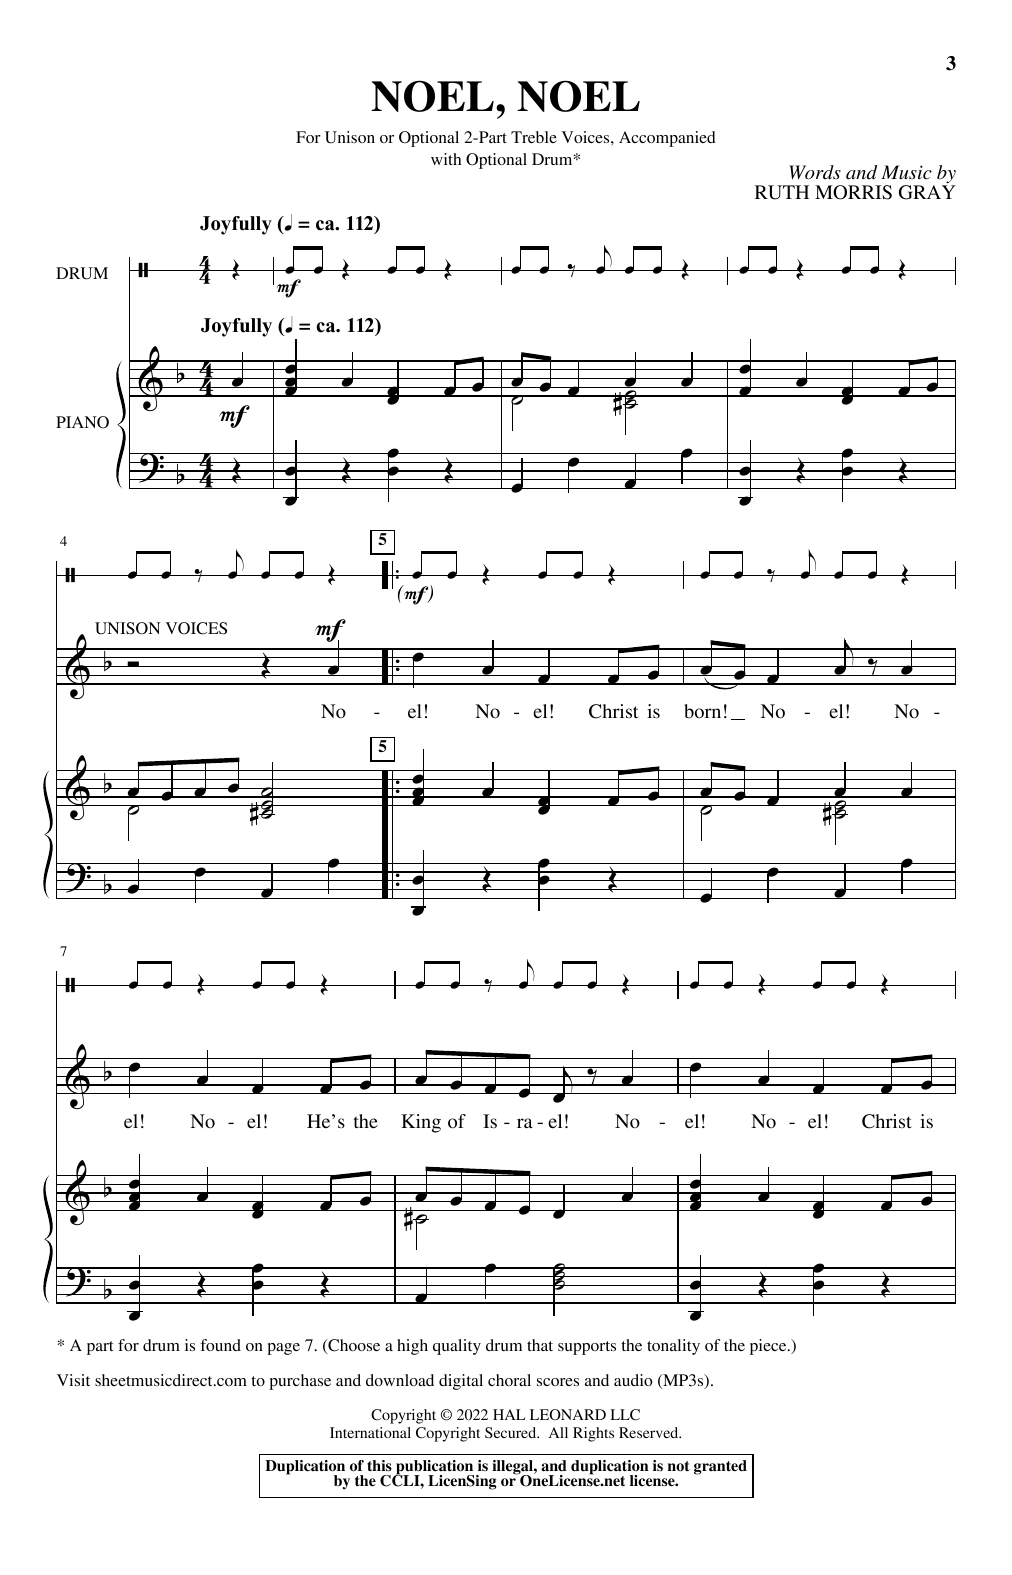 Ruth Morris Gray Noel, Noel sheet music notes and chords arranged for Unison Choir